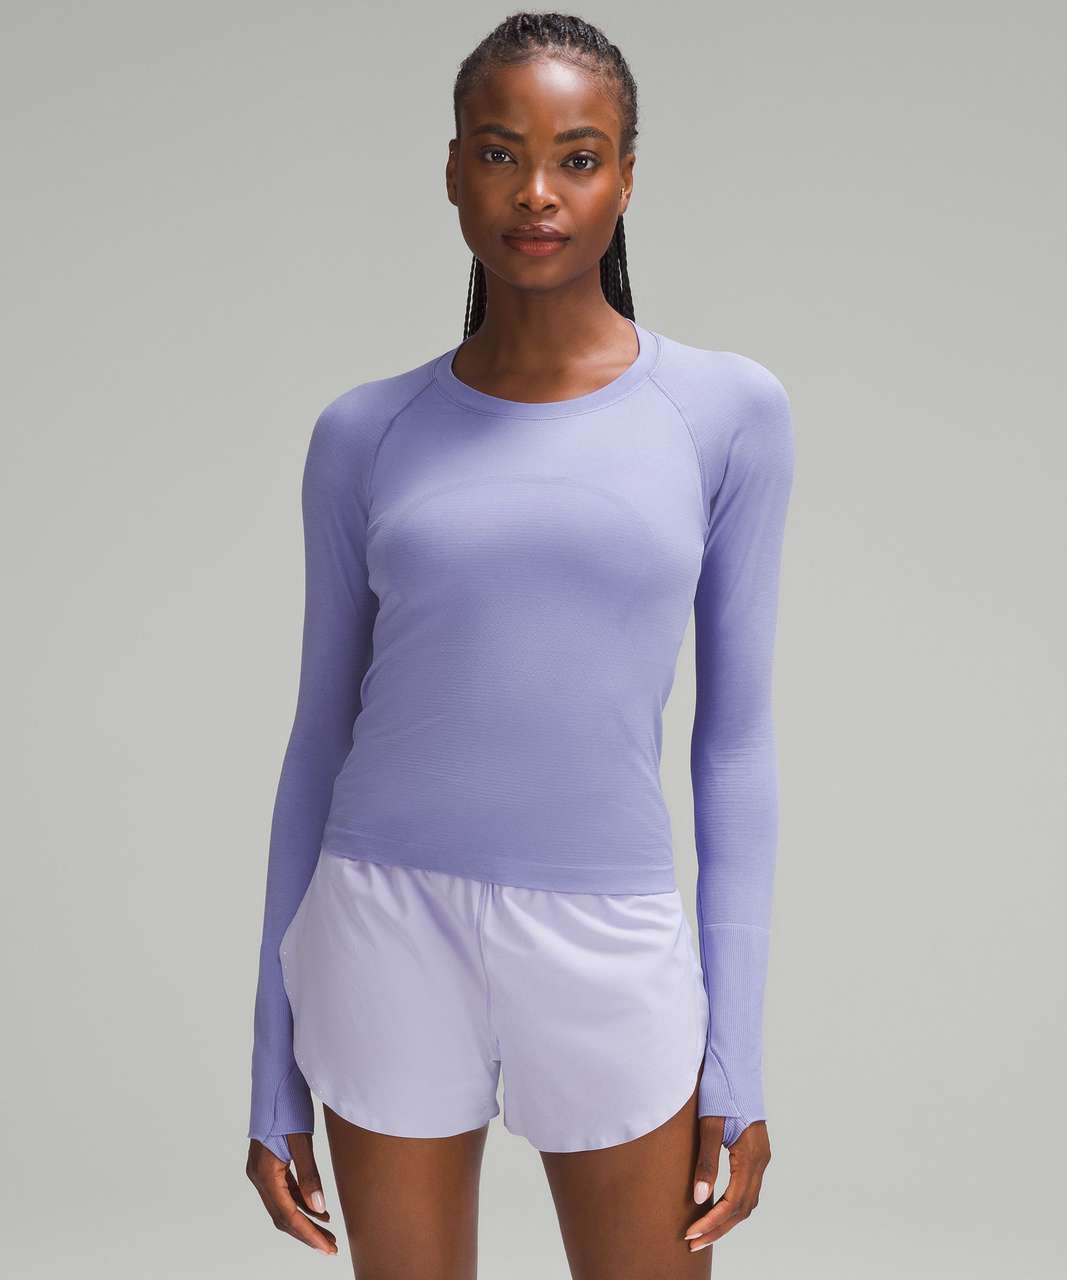 Lululemon Swiftly Tech Long-Sleeve Shirt 2.0 *Race Length - Dark Lavender / Dark Lavender